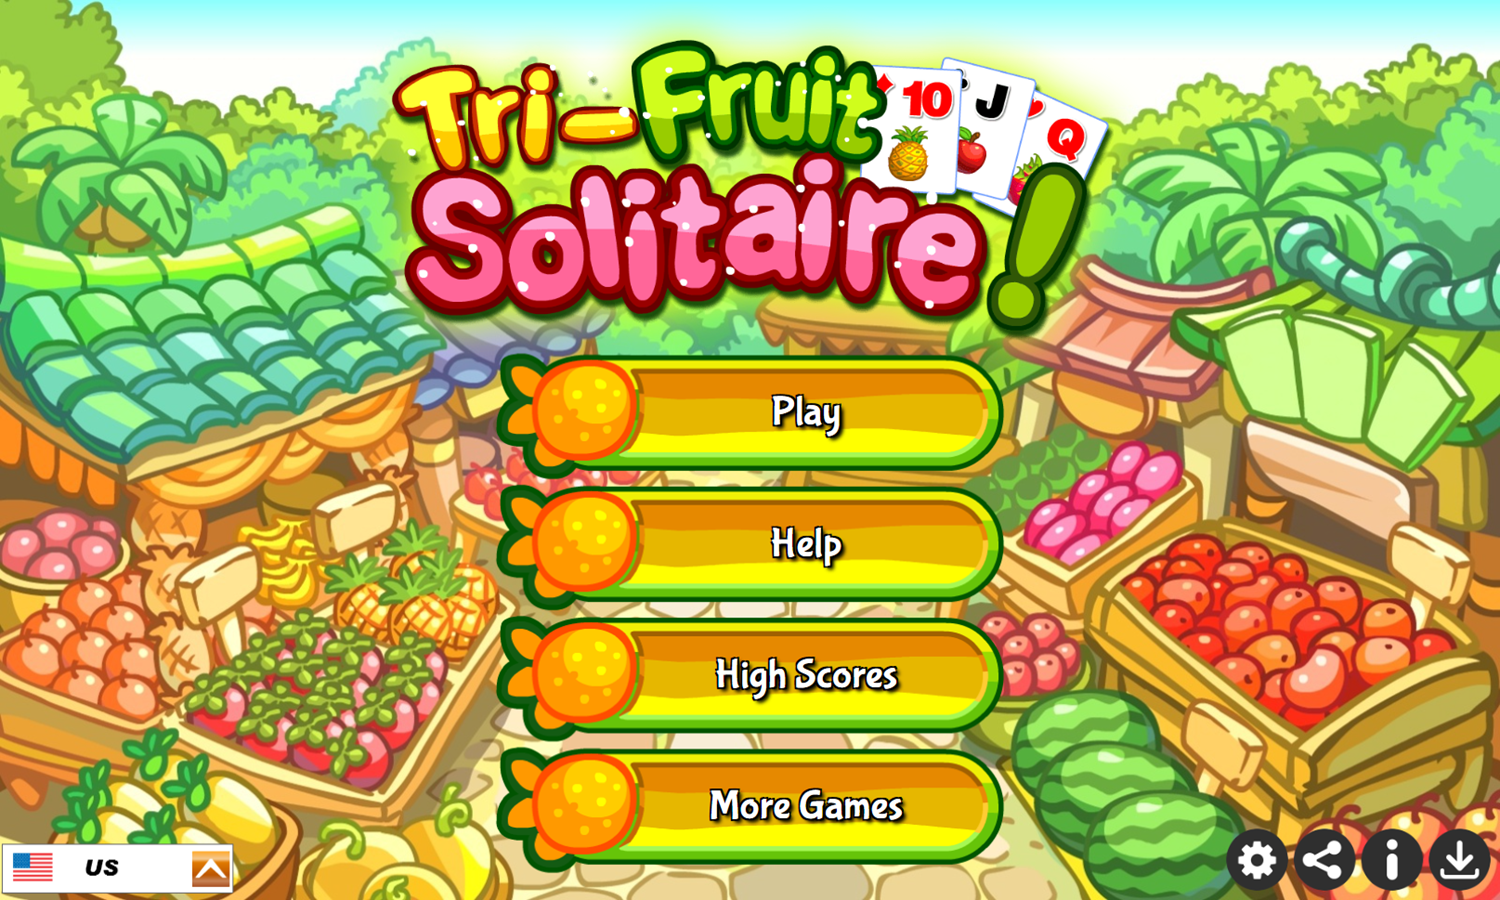 Tri-Fruit Solitaire Game Welcome Screen Screenshot.